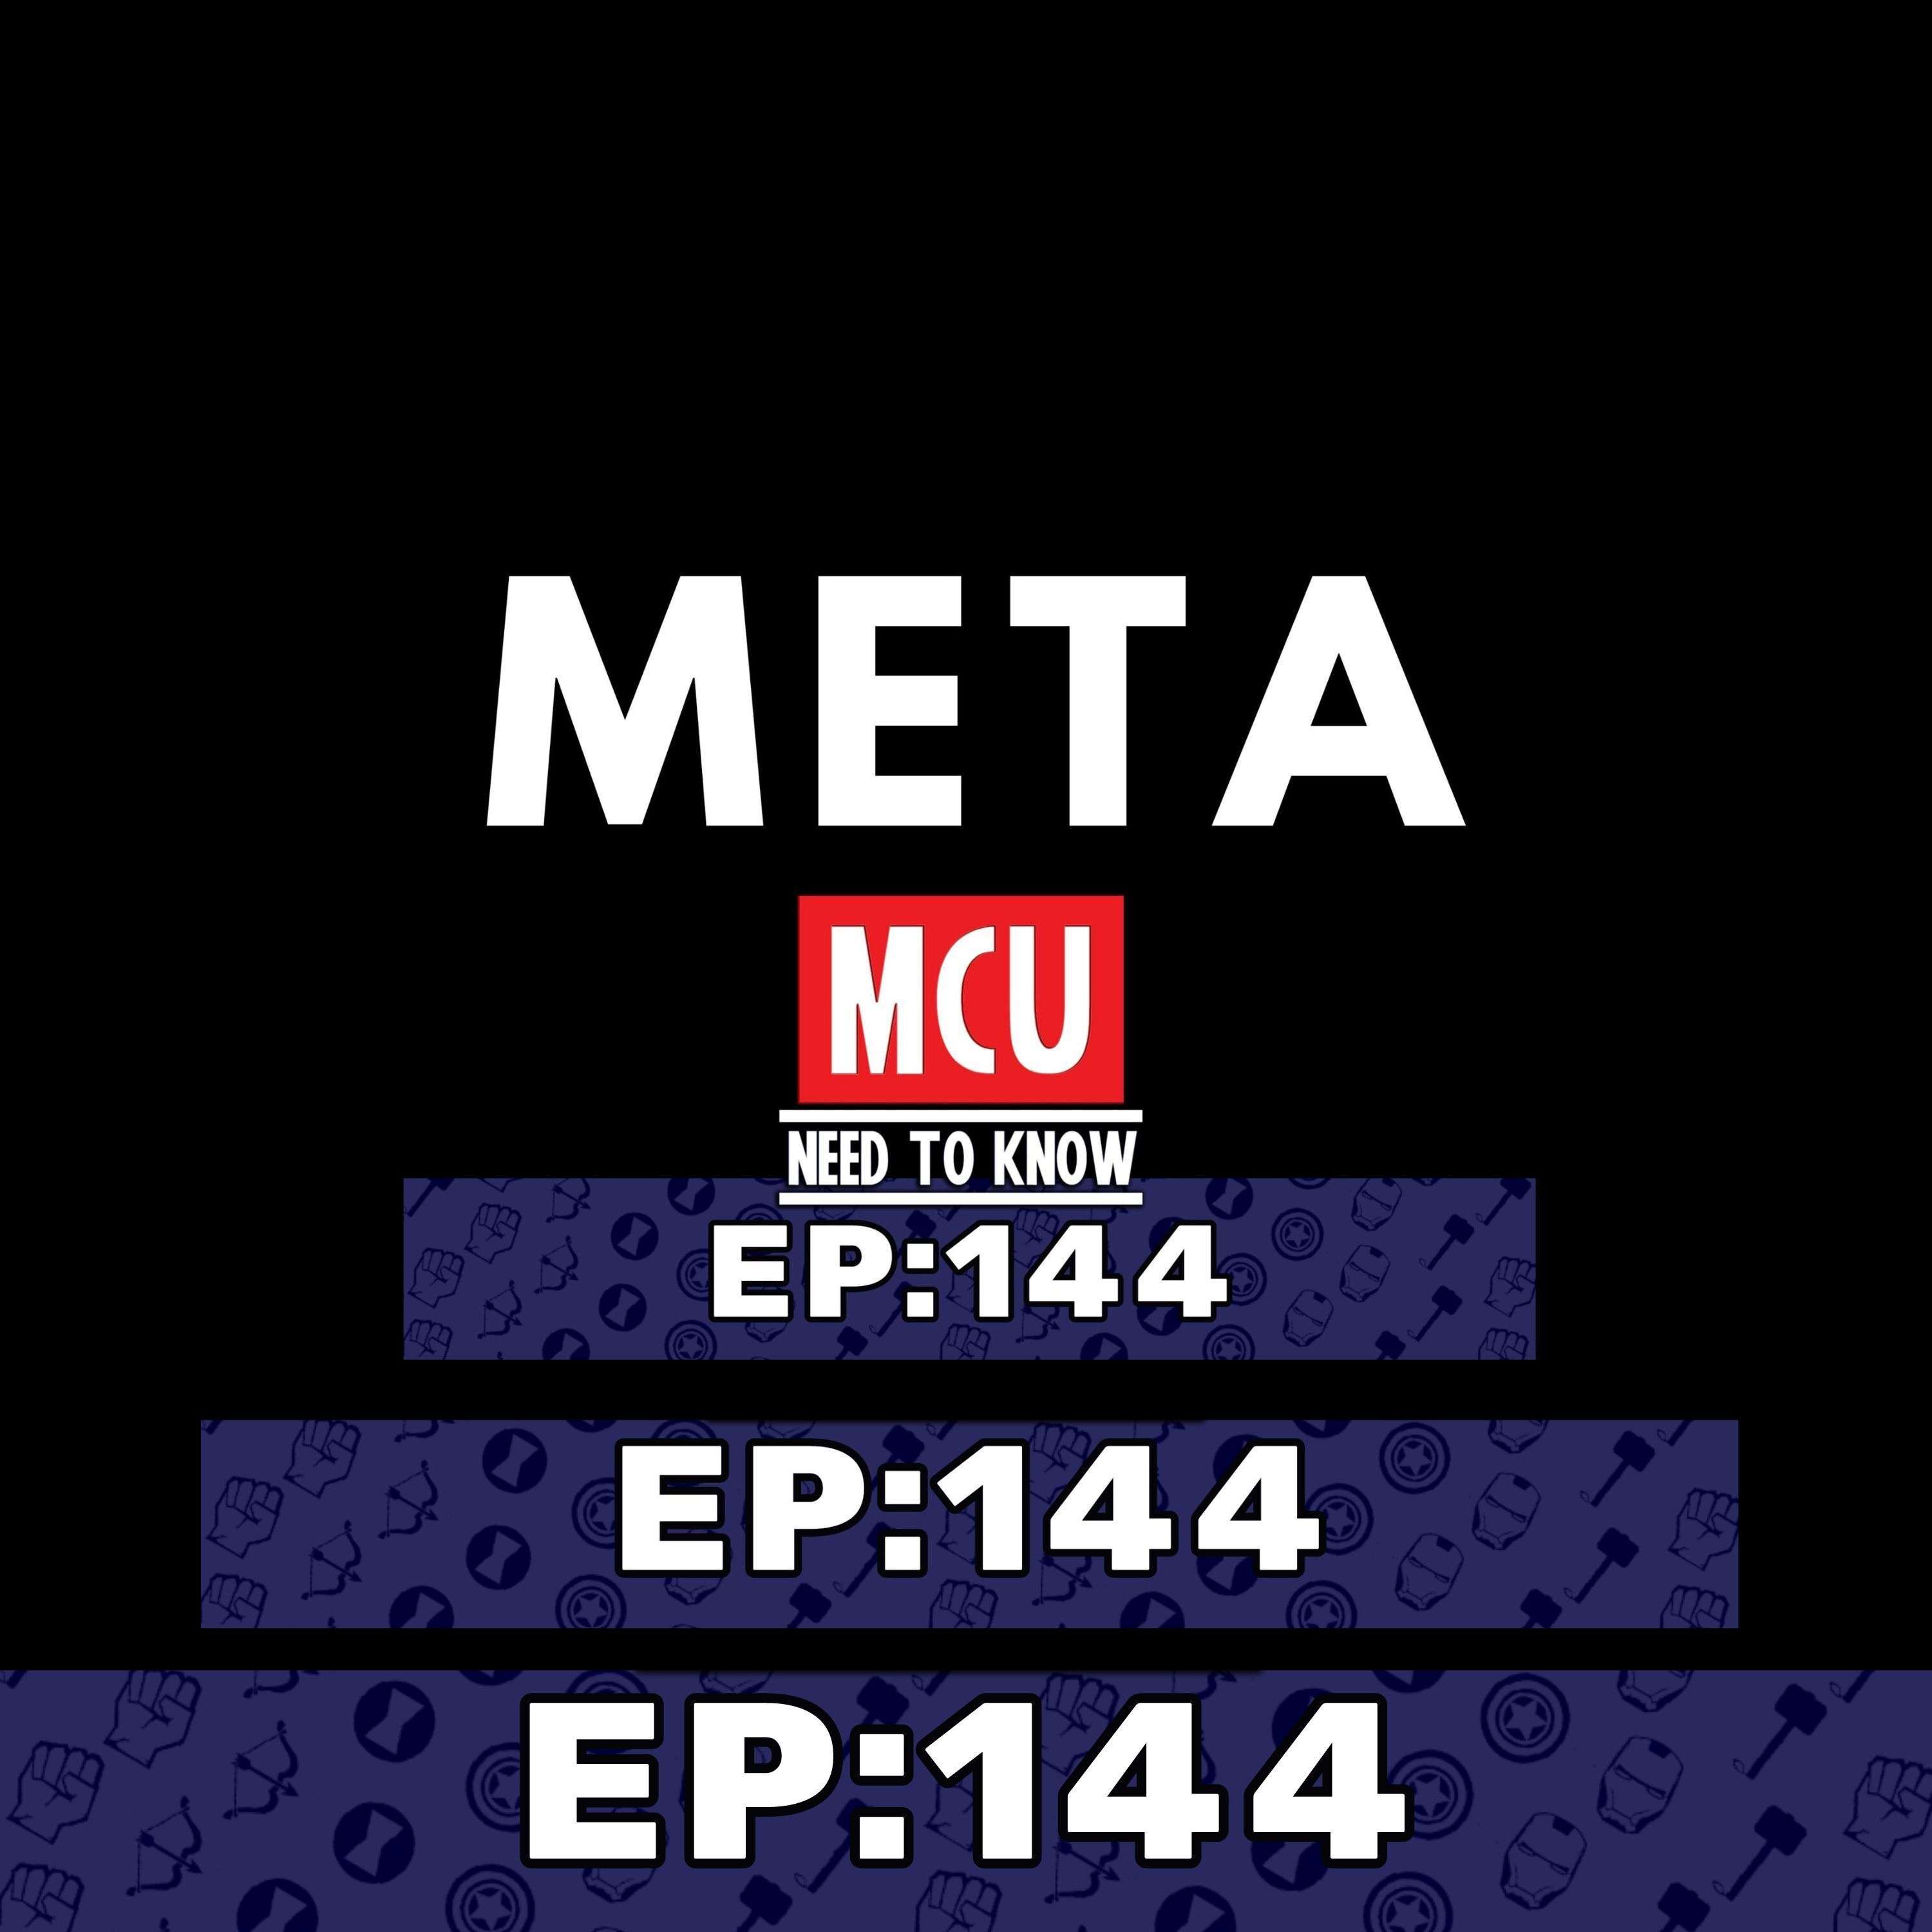 The Meta Episode 7